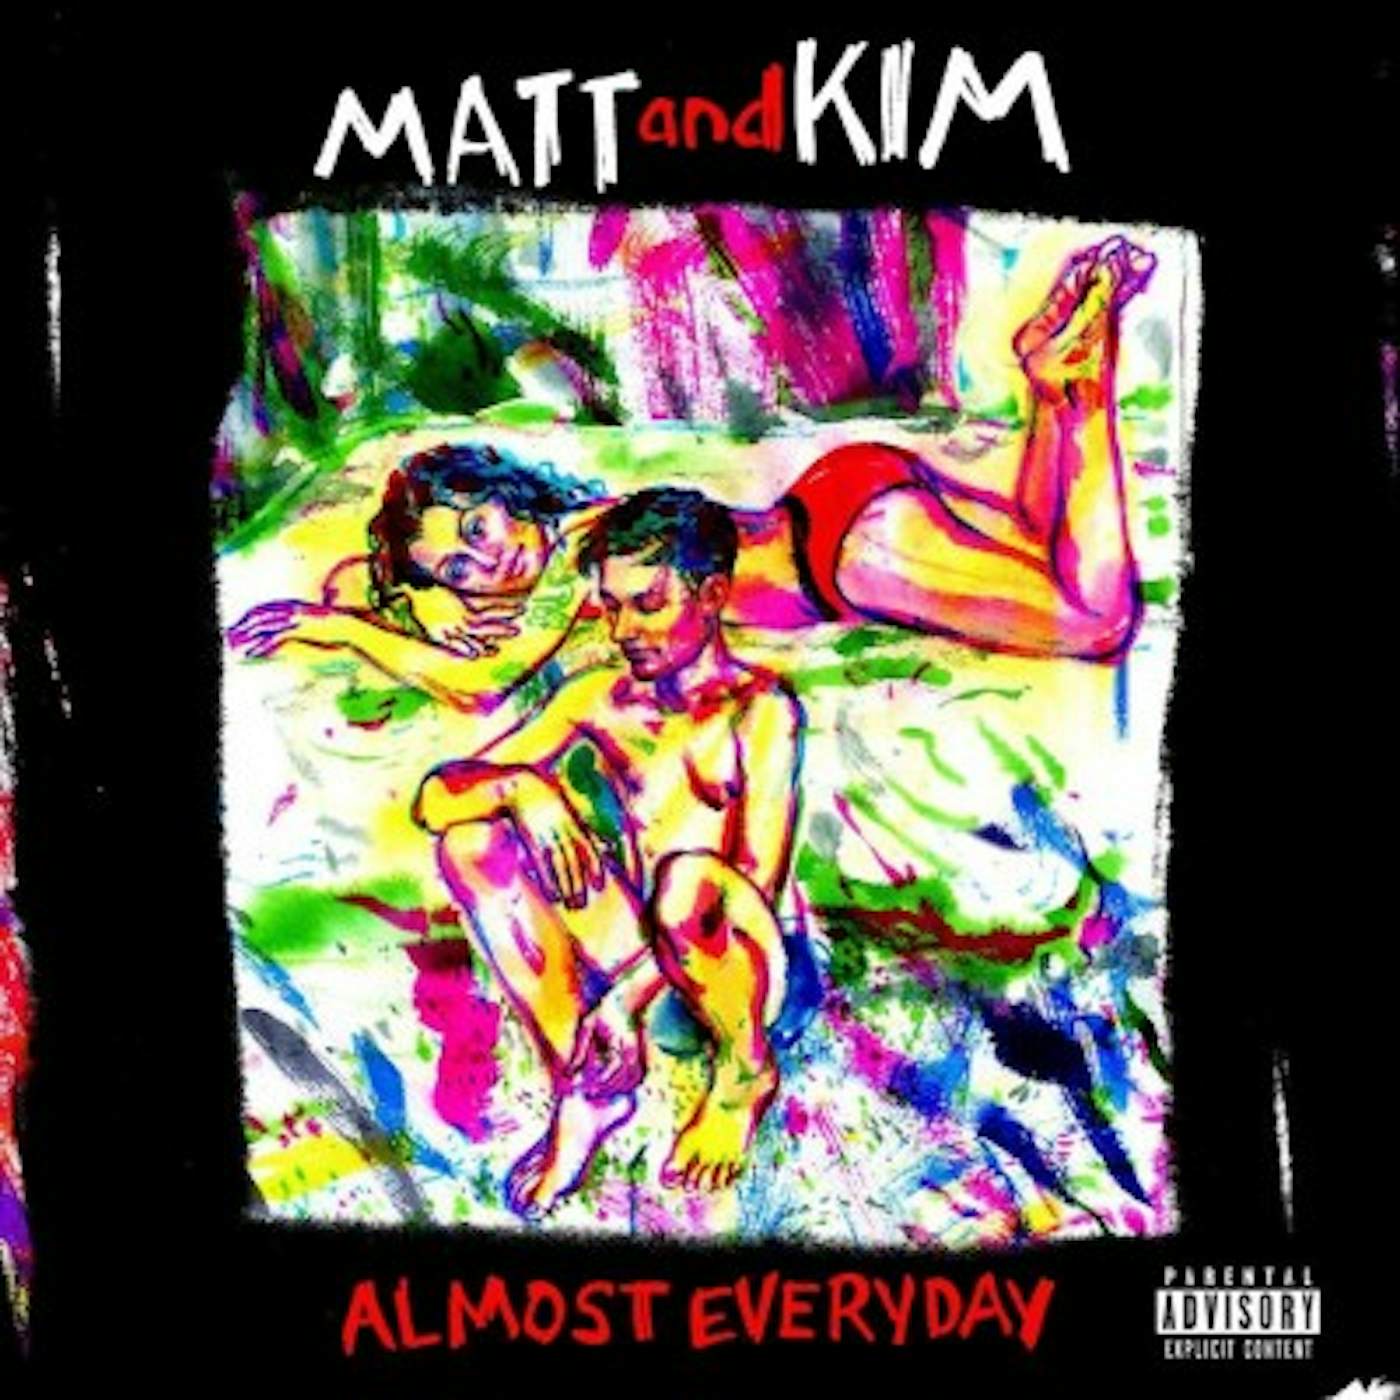 Matt and Kim ALMOST EVERYDAY (LIMITED RED VINYL) Vinyl Record